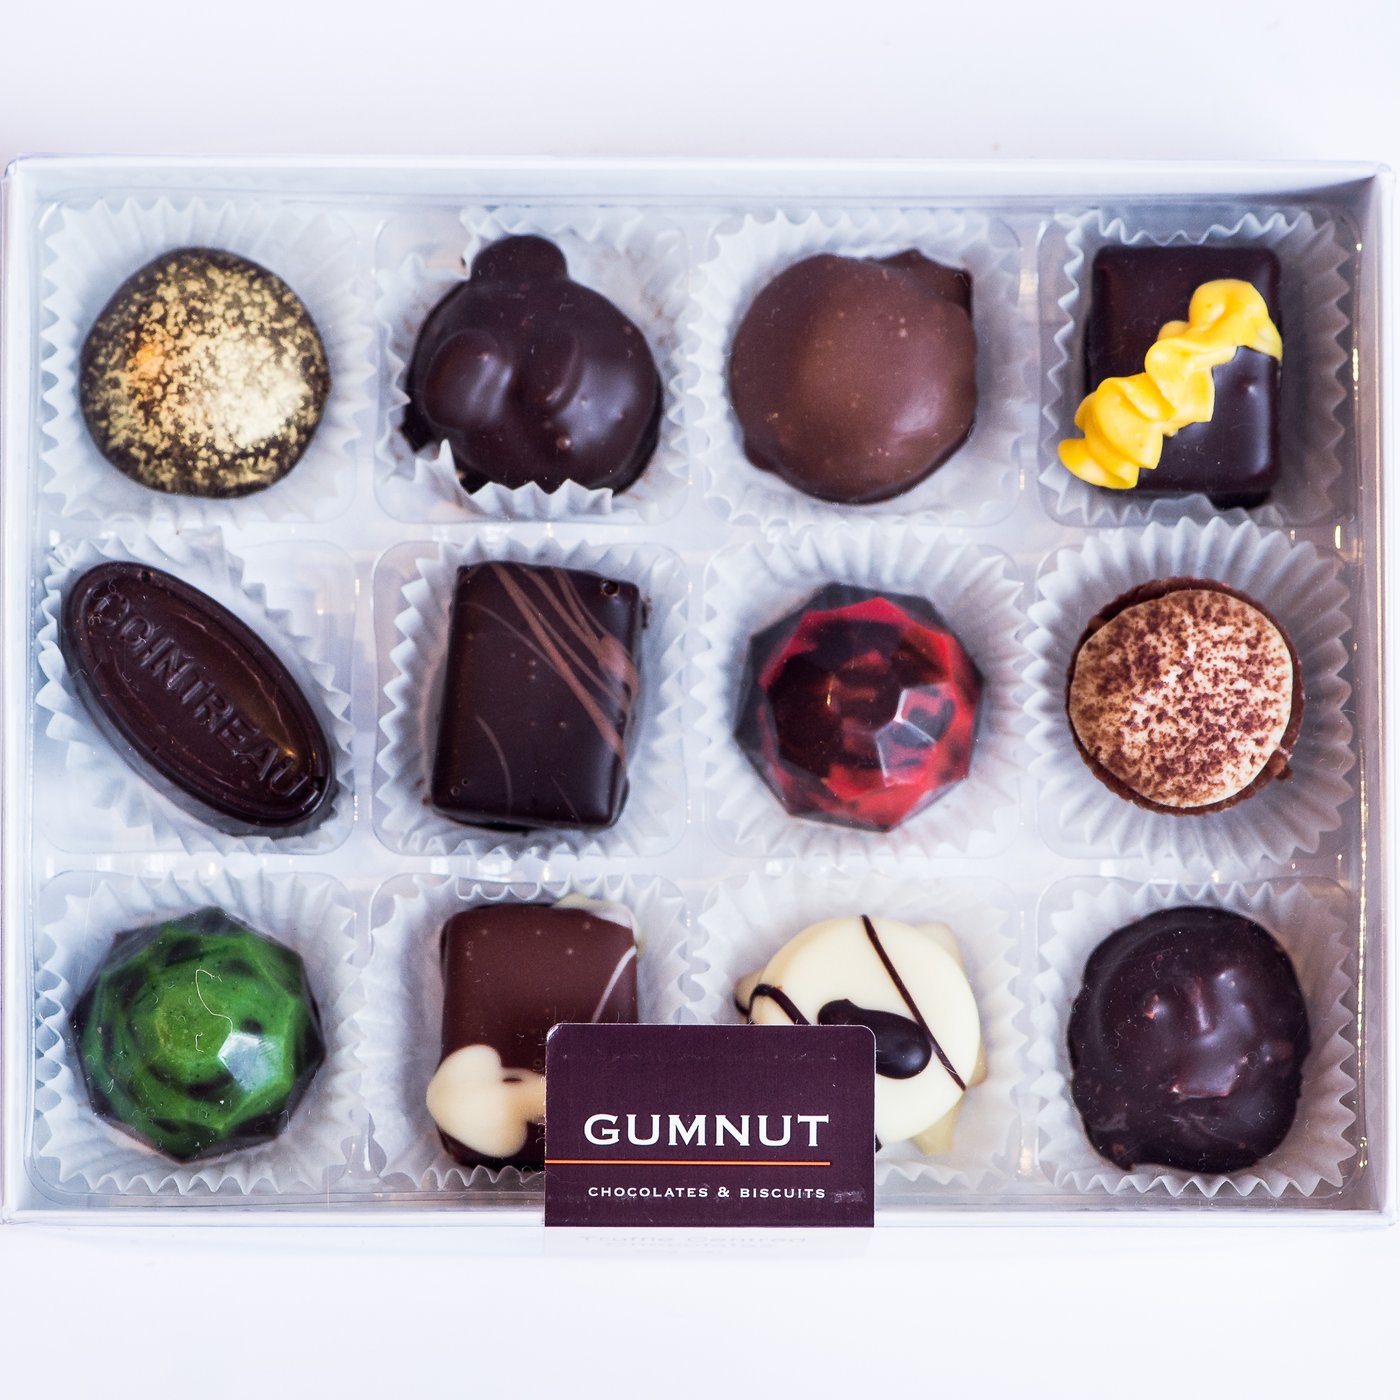 GUMNUT CHOCOLATE - Mixed Chocolate Box